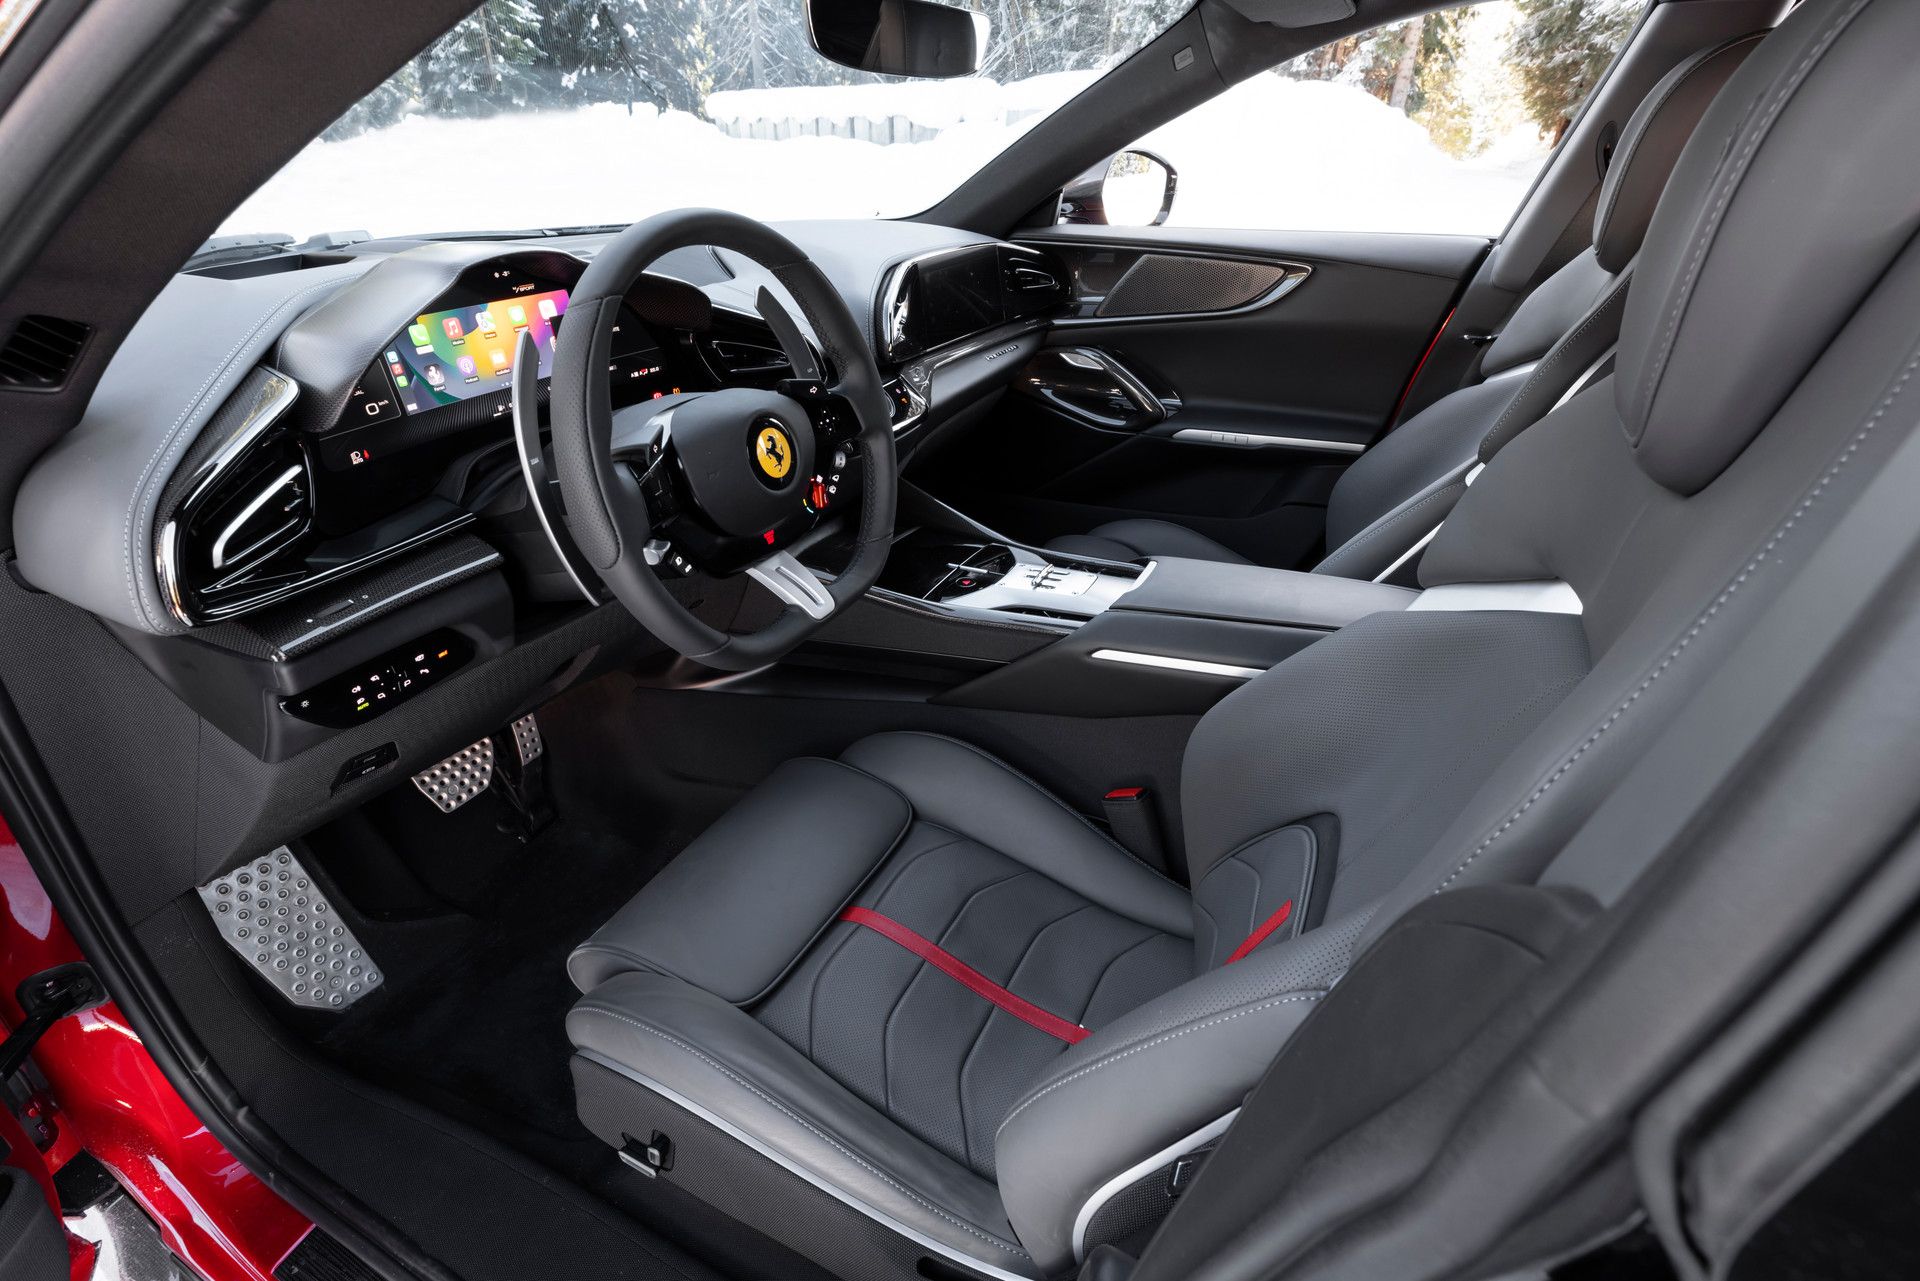 2023 Ferrari Purosangue Review: $393,000 Luxury SUV They Swore